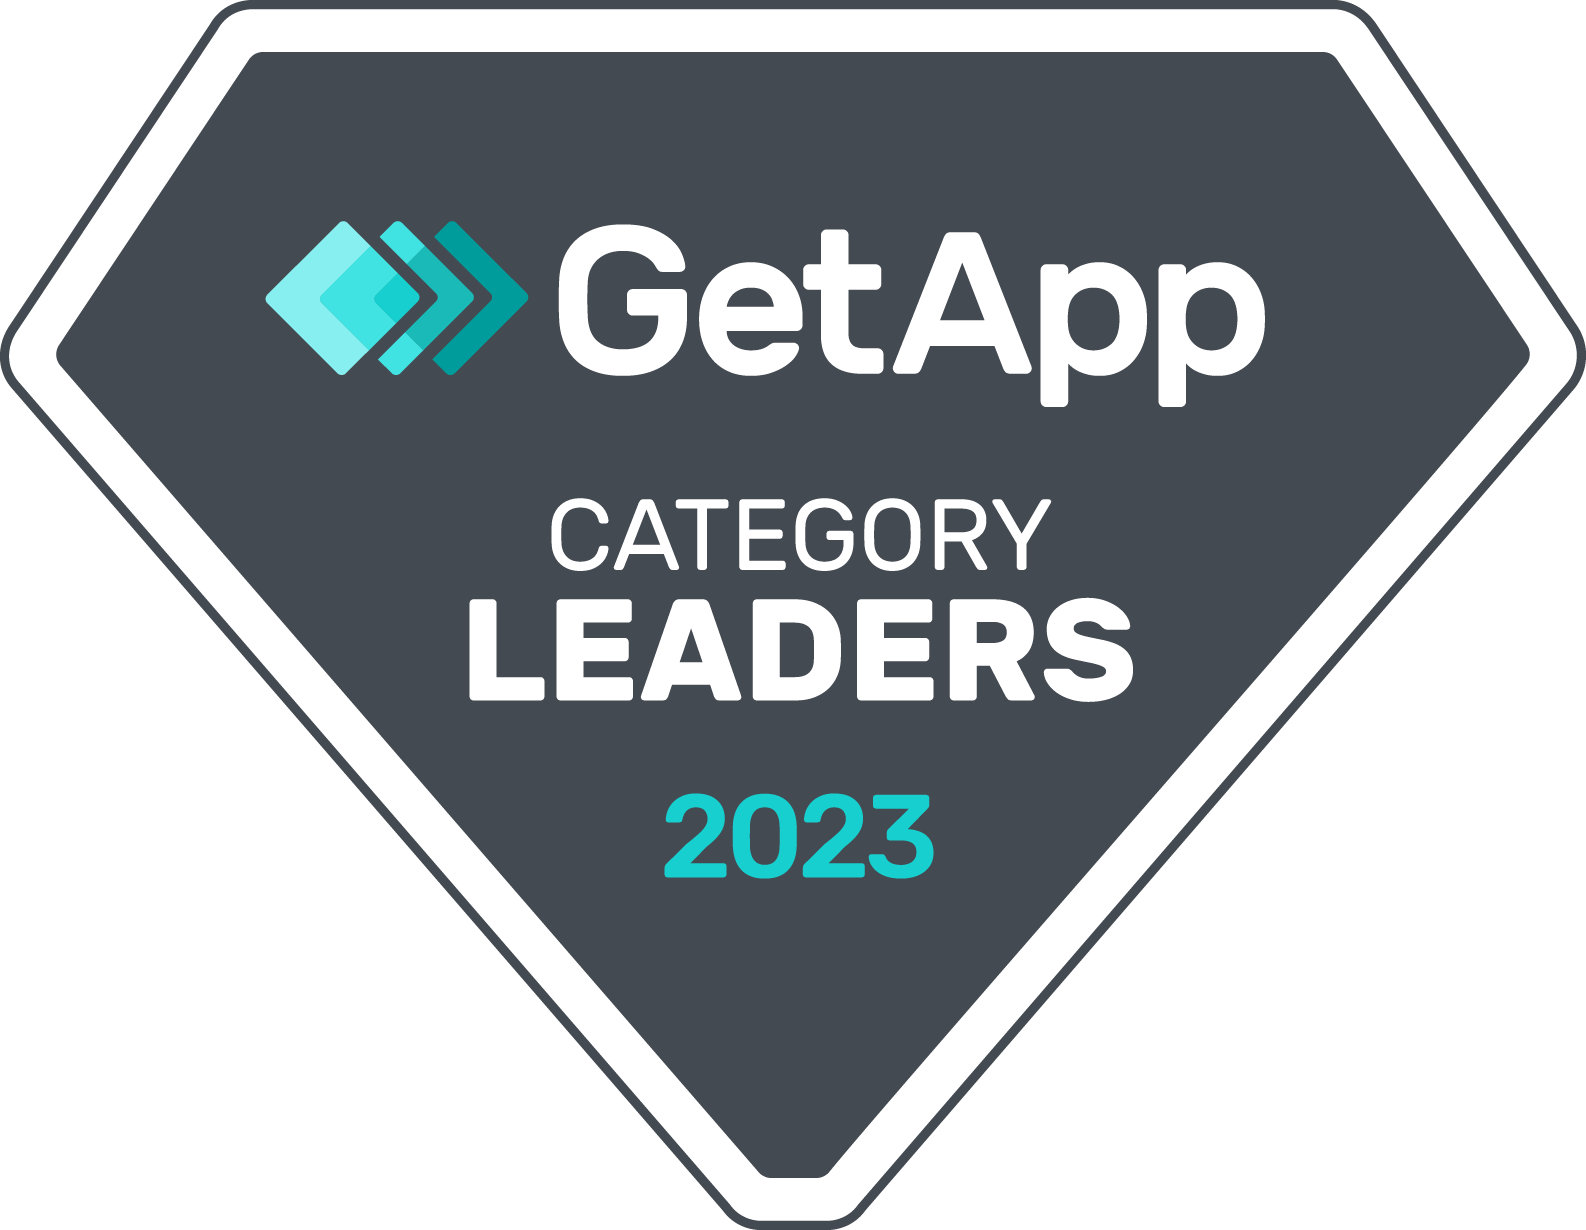 Get App Category Leaders award badge 2023